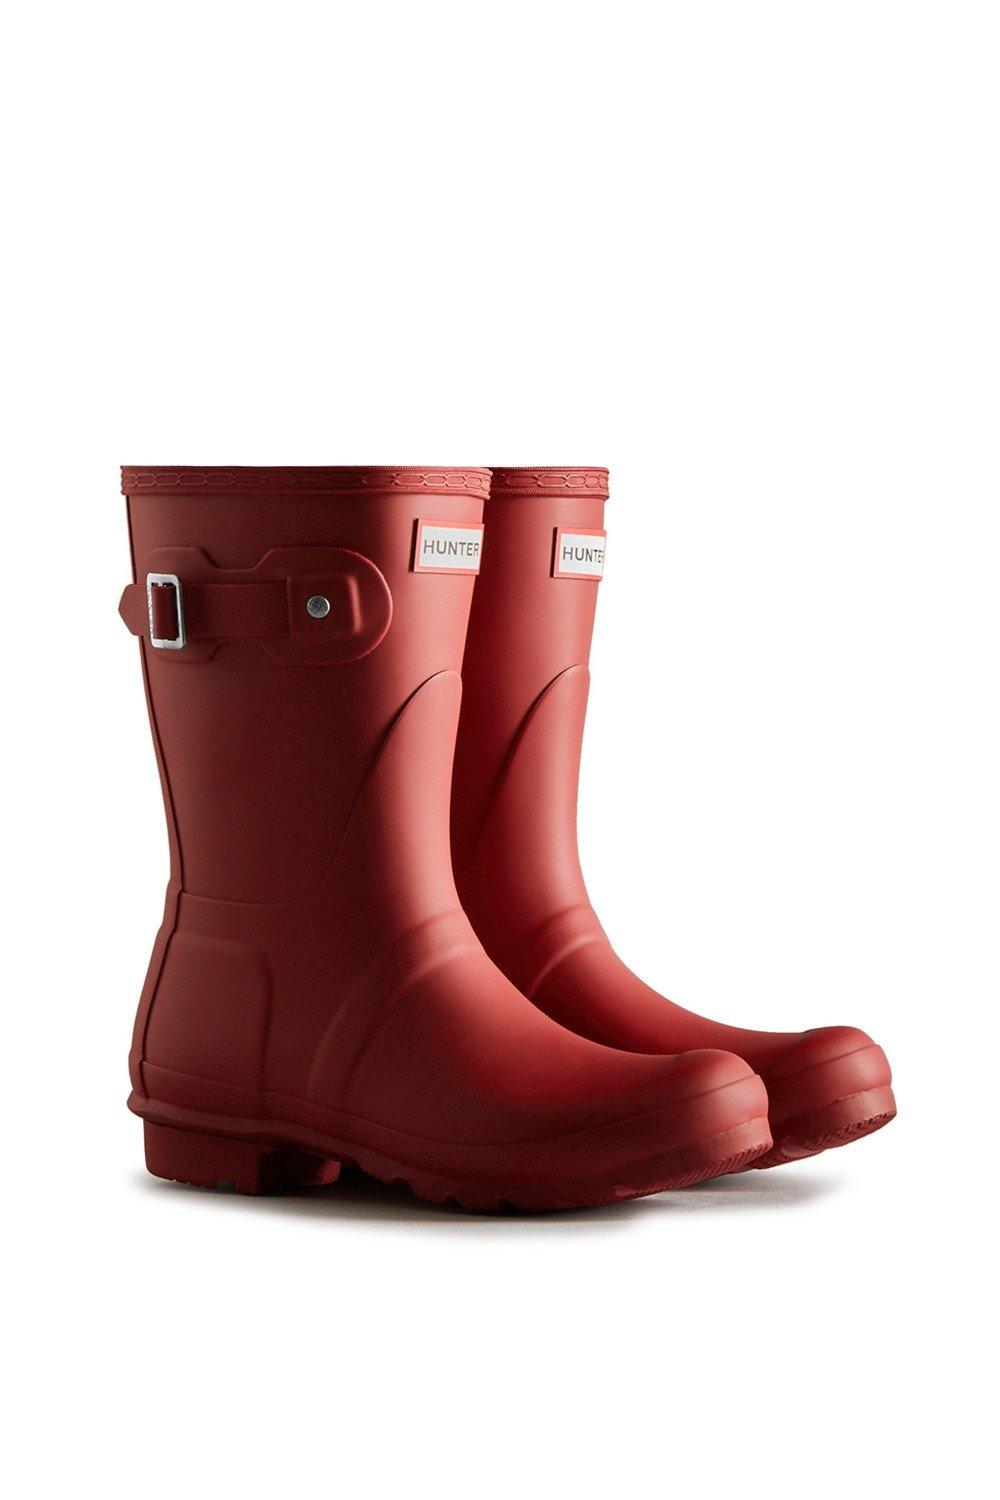 Hunter Women's 'Original Short' Wellington Boots|Size: 8|red